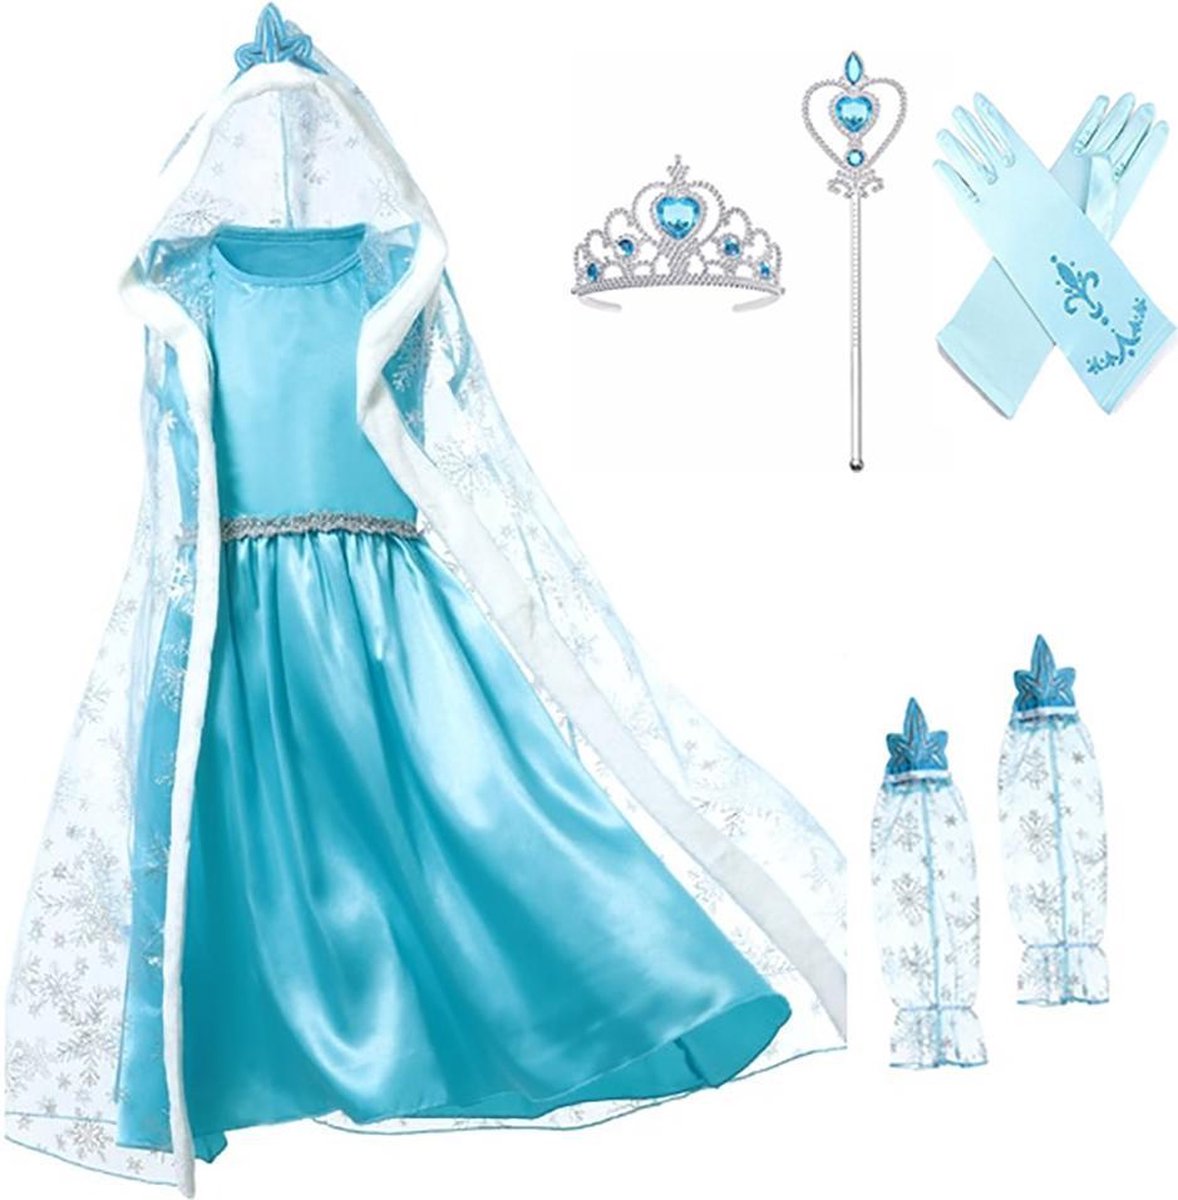 Het Betere Merk - Prinsessenjurk meisje - Blauwe jurk - maat 134/140 (140) - losse cape + mouwen - Tiara - Toverstaf prinses - Handschoenen - Carnavalskleding meisje - Verkleedkleren Kind - Cadeau meisje - Verjaardag - Prinsessen speelgoed